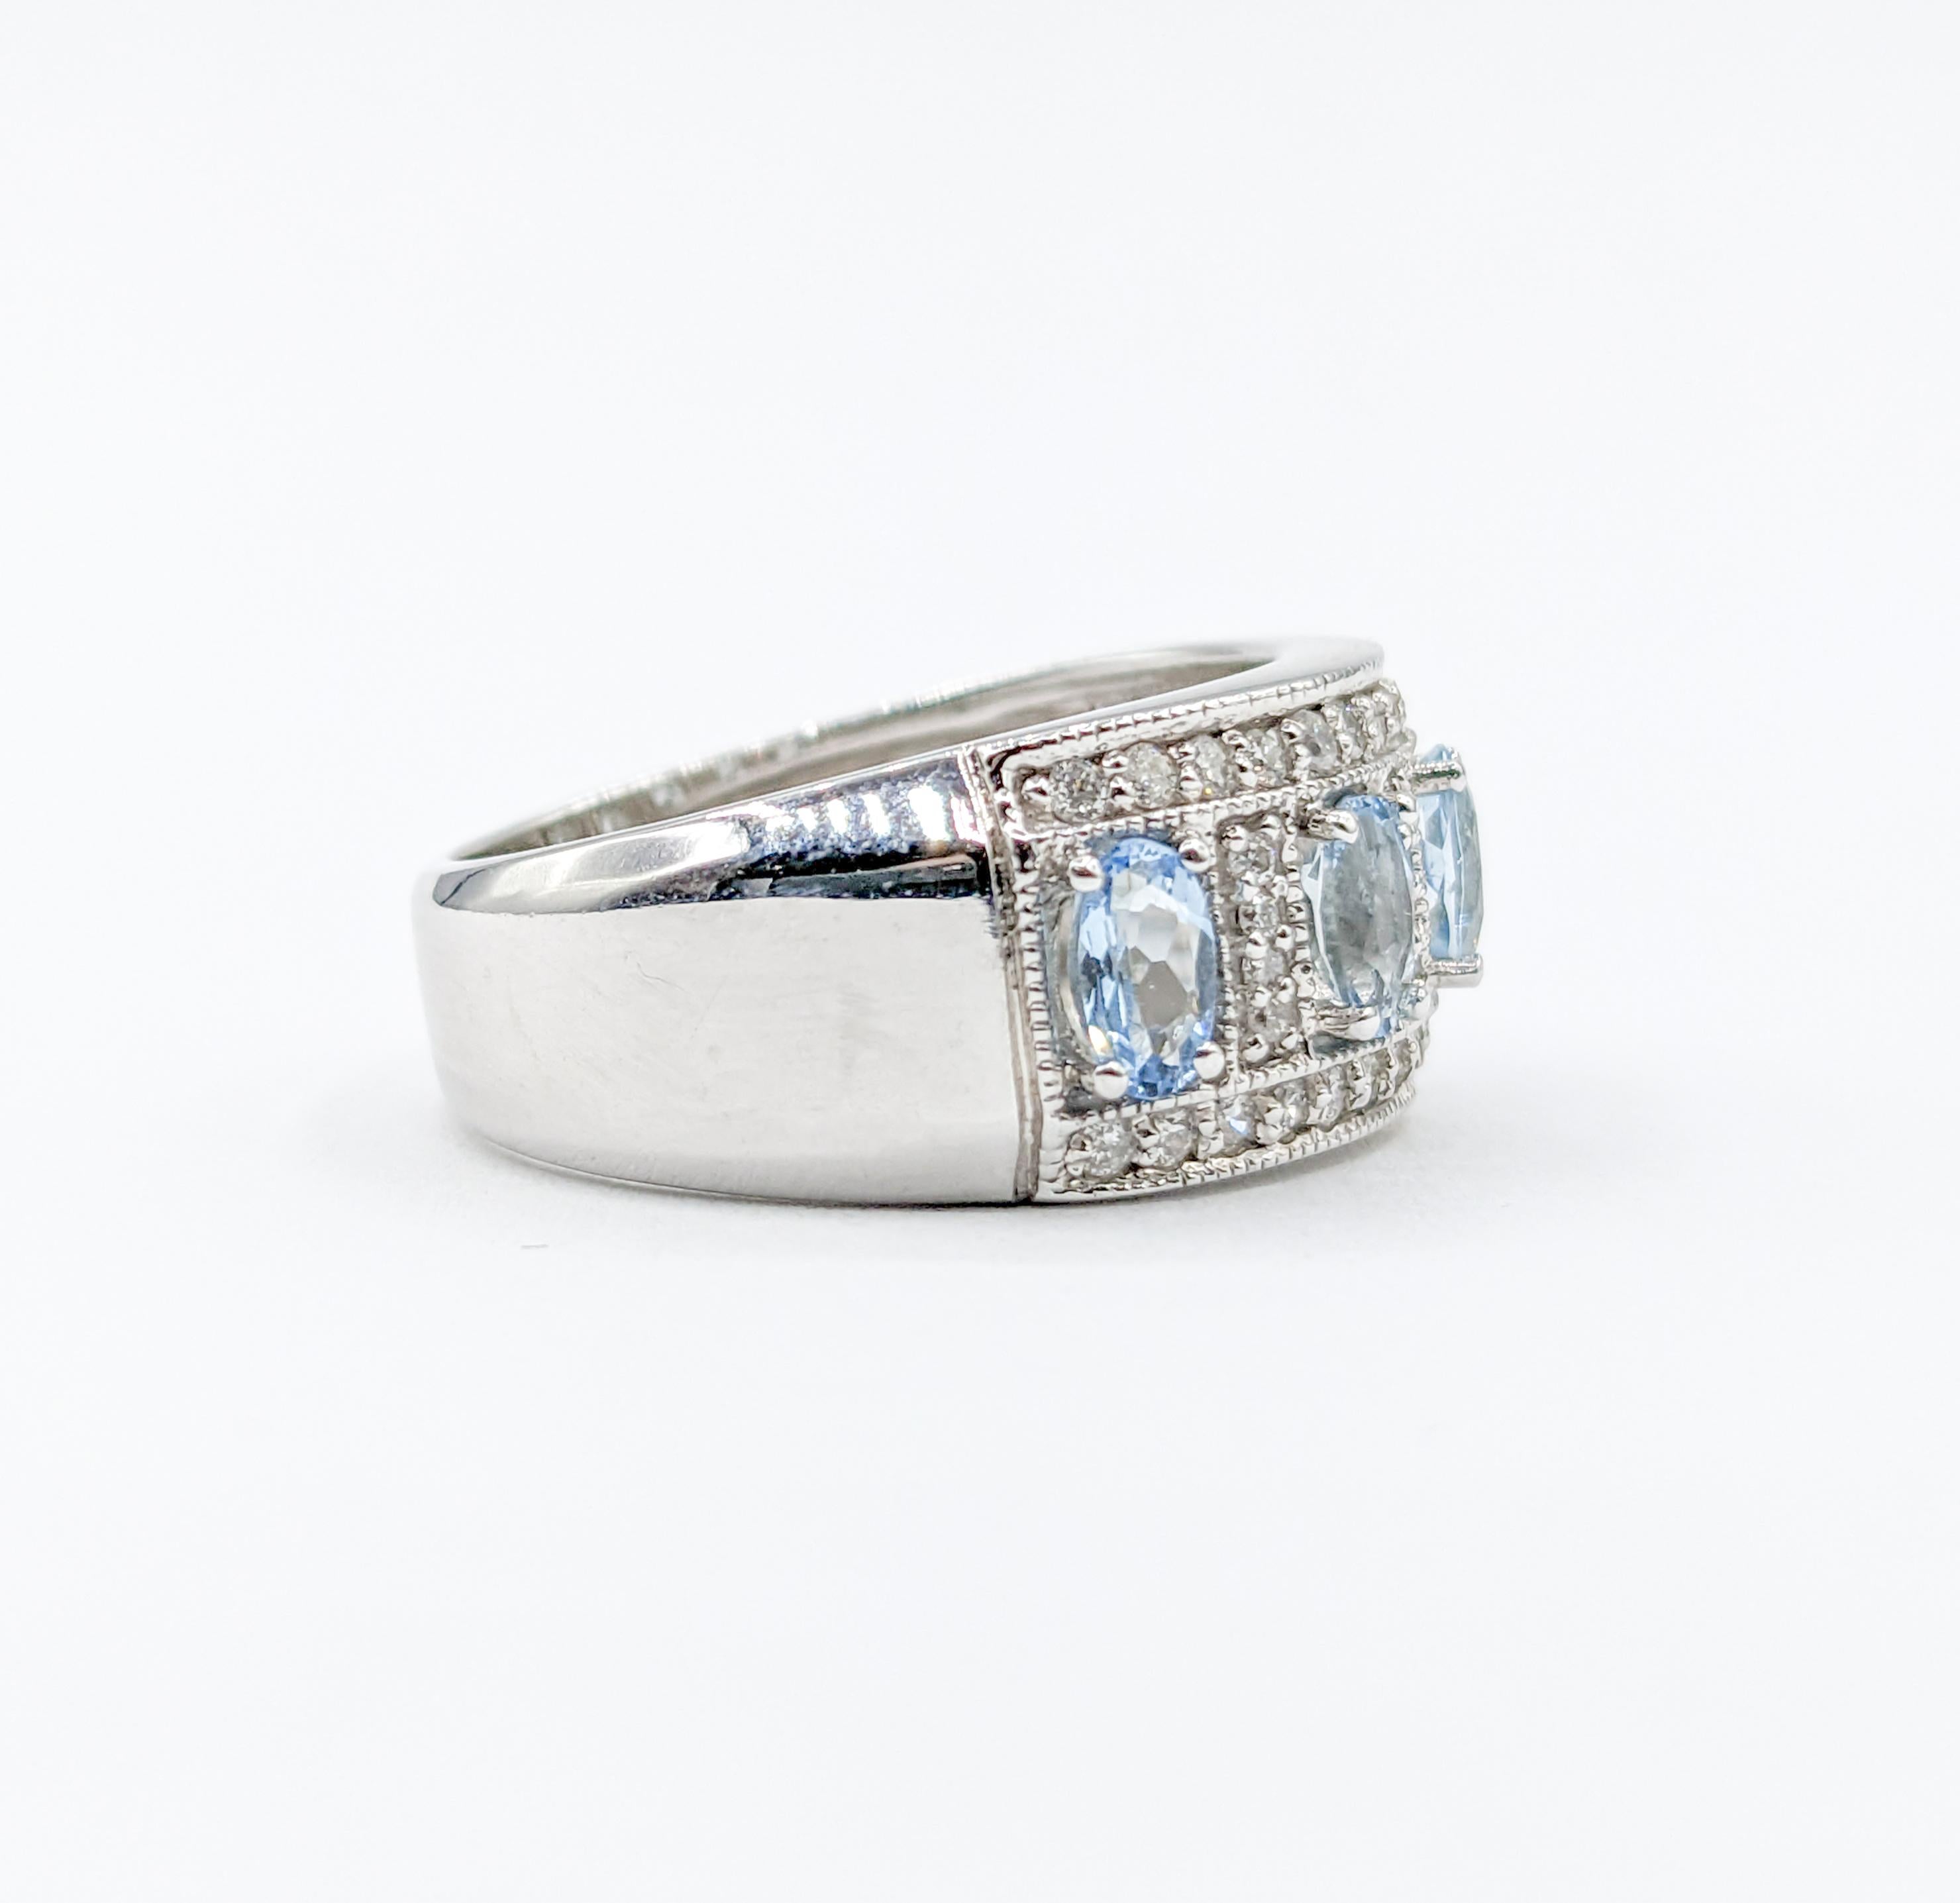  Fabulous Aquamarine & Diamond Wide Band Ring in White Gold 2